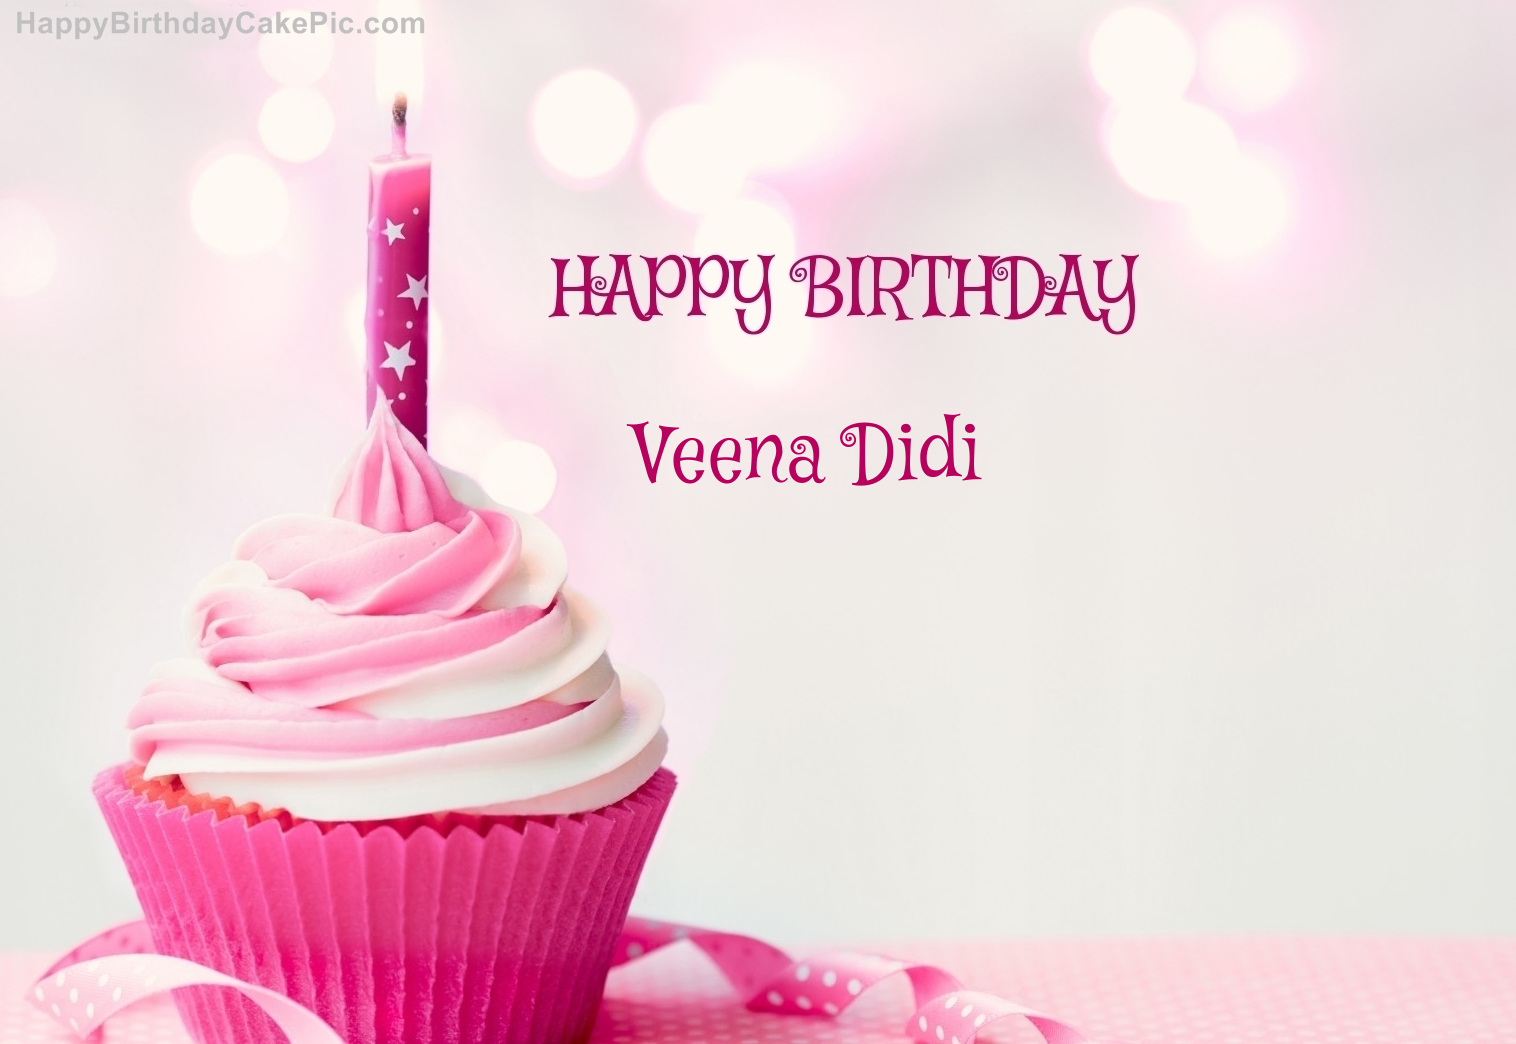 ️ Happy Birthday Cupcake Candle Pink Cake For Veena Didi